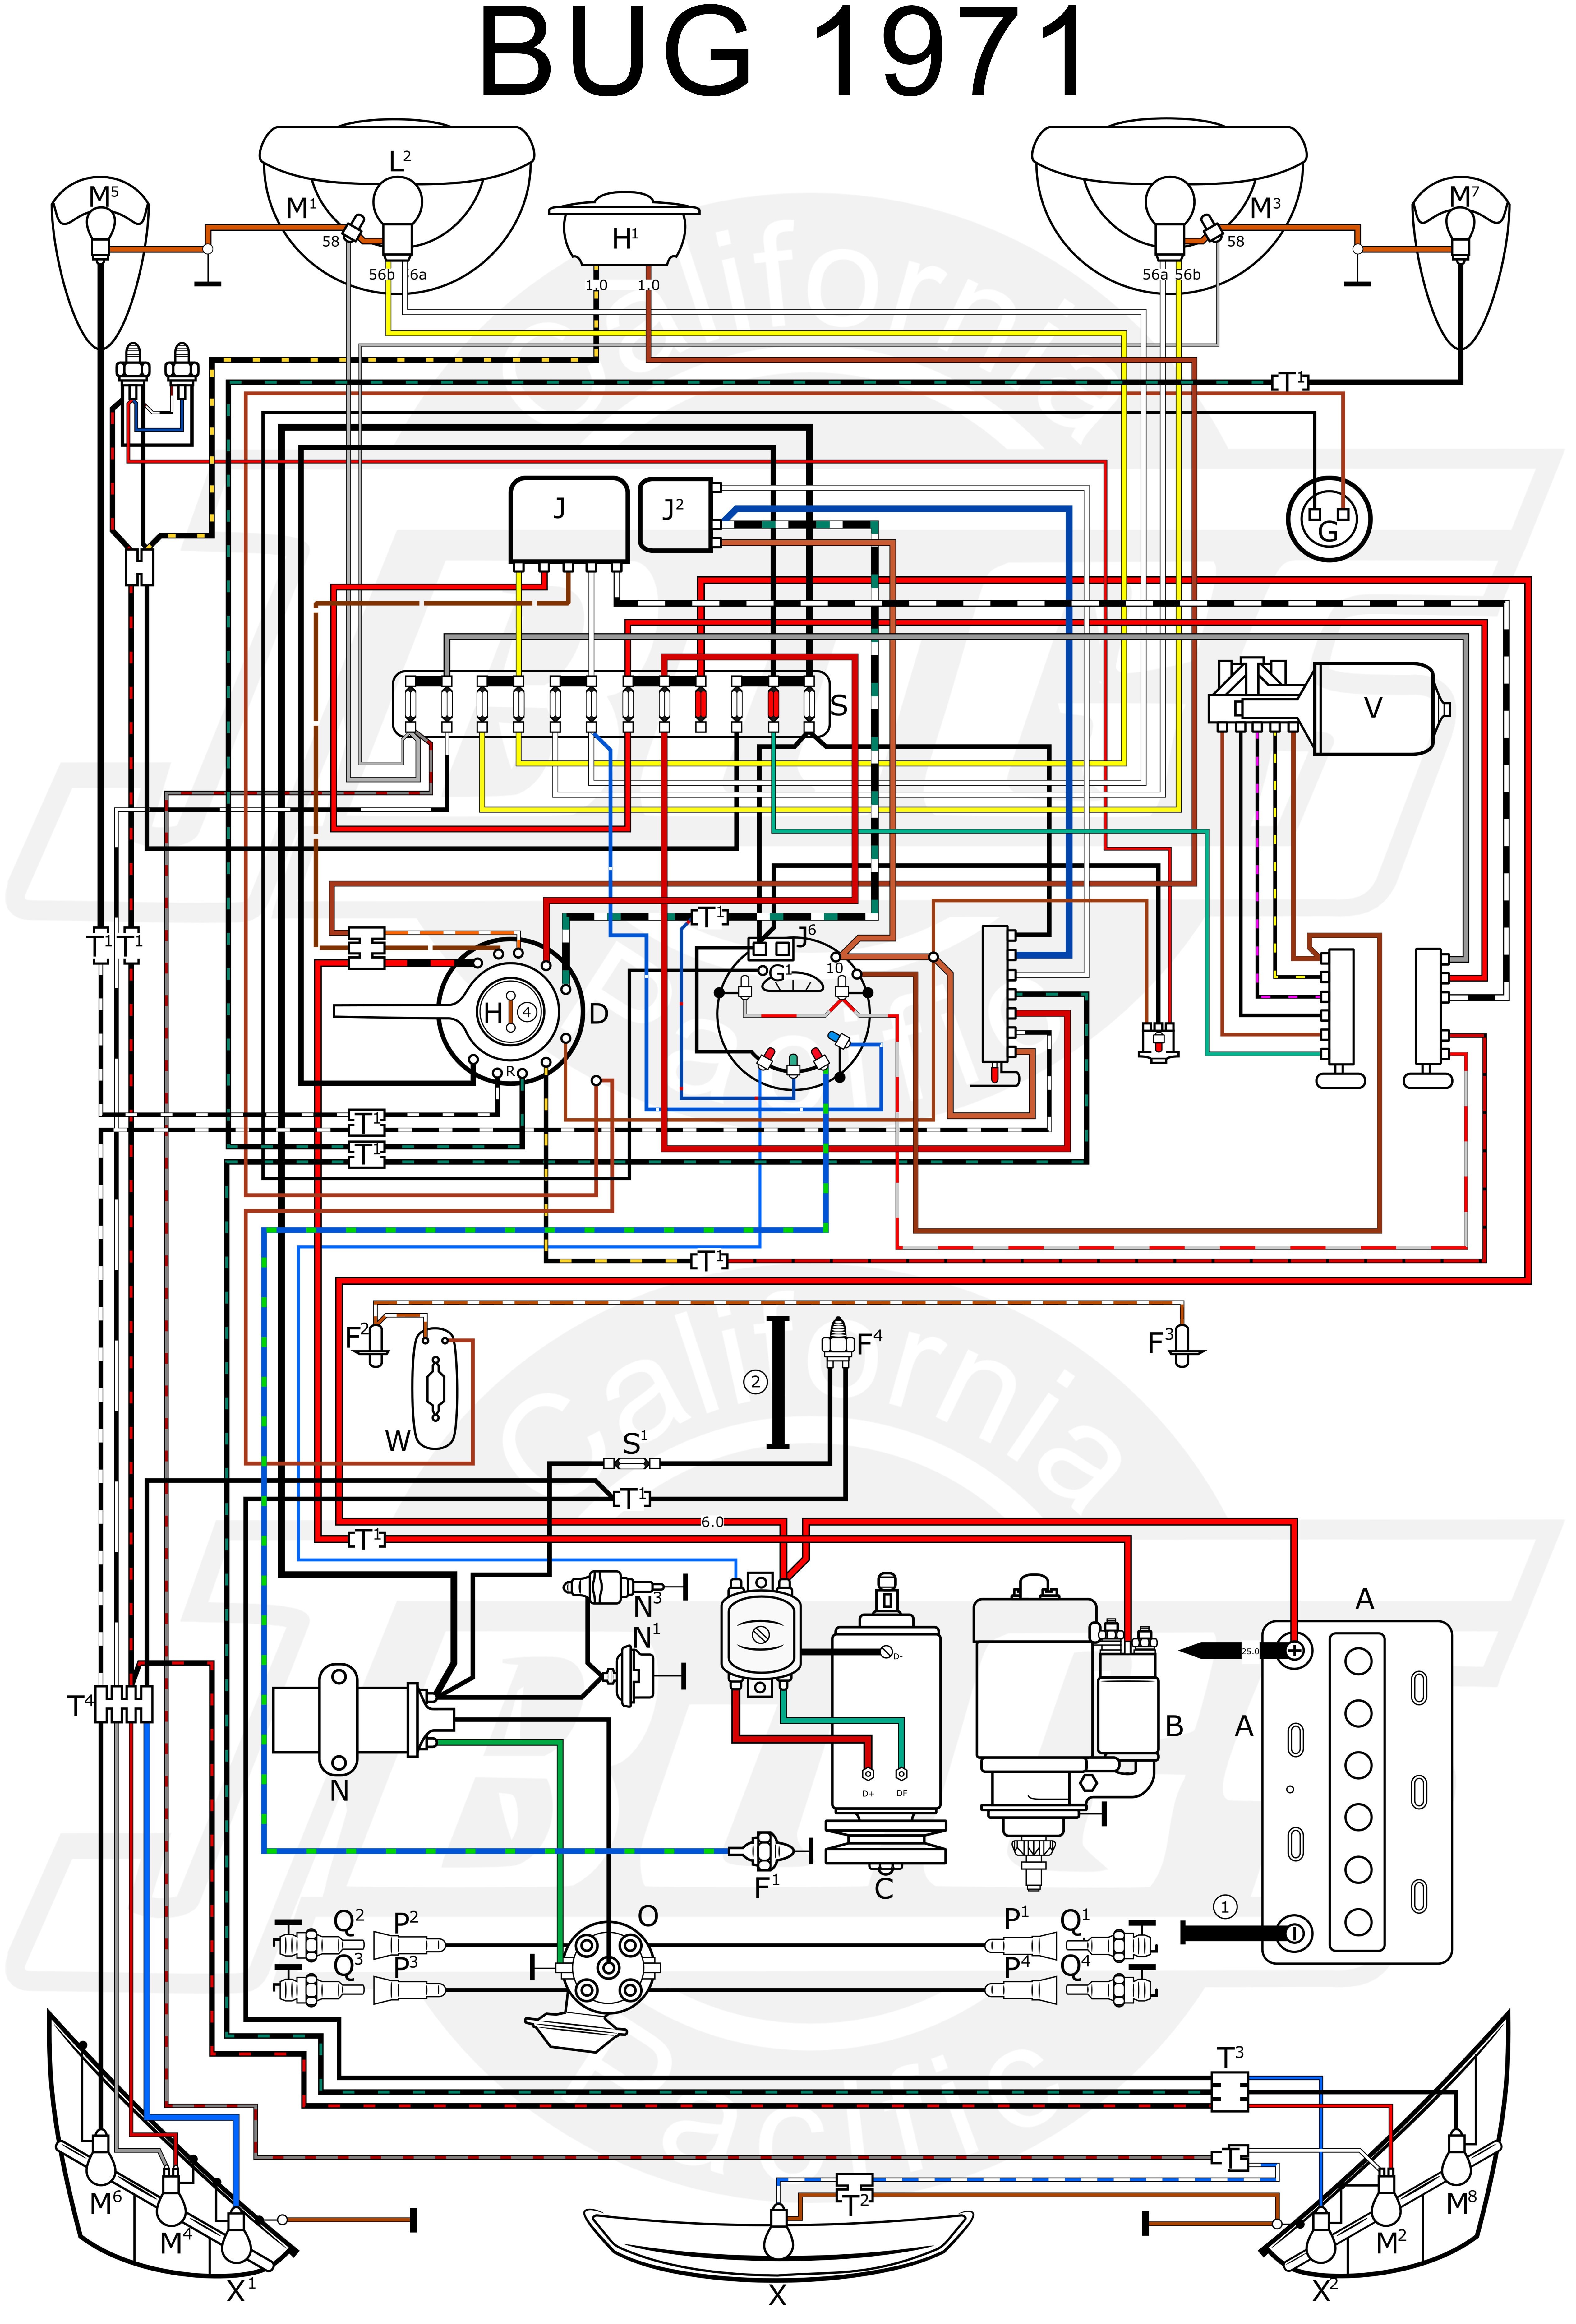 1999 Vw Beetle Engine Diagram 1978 Vw Super Beetle Engine Diagrams Experts Wiring Diagram • Of 1999 Vw Beetle Engine Diagram